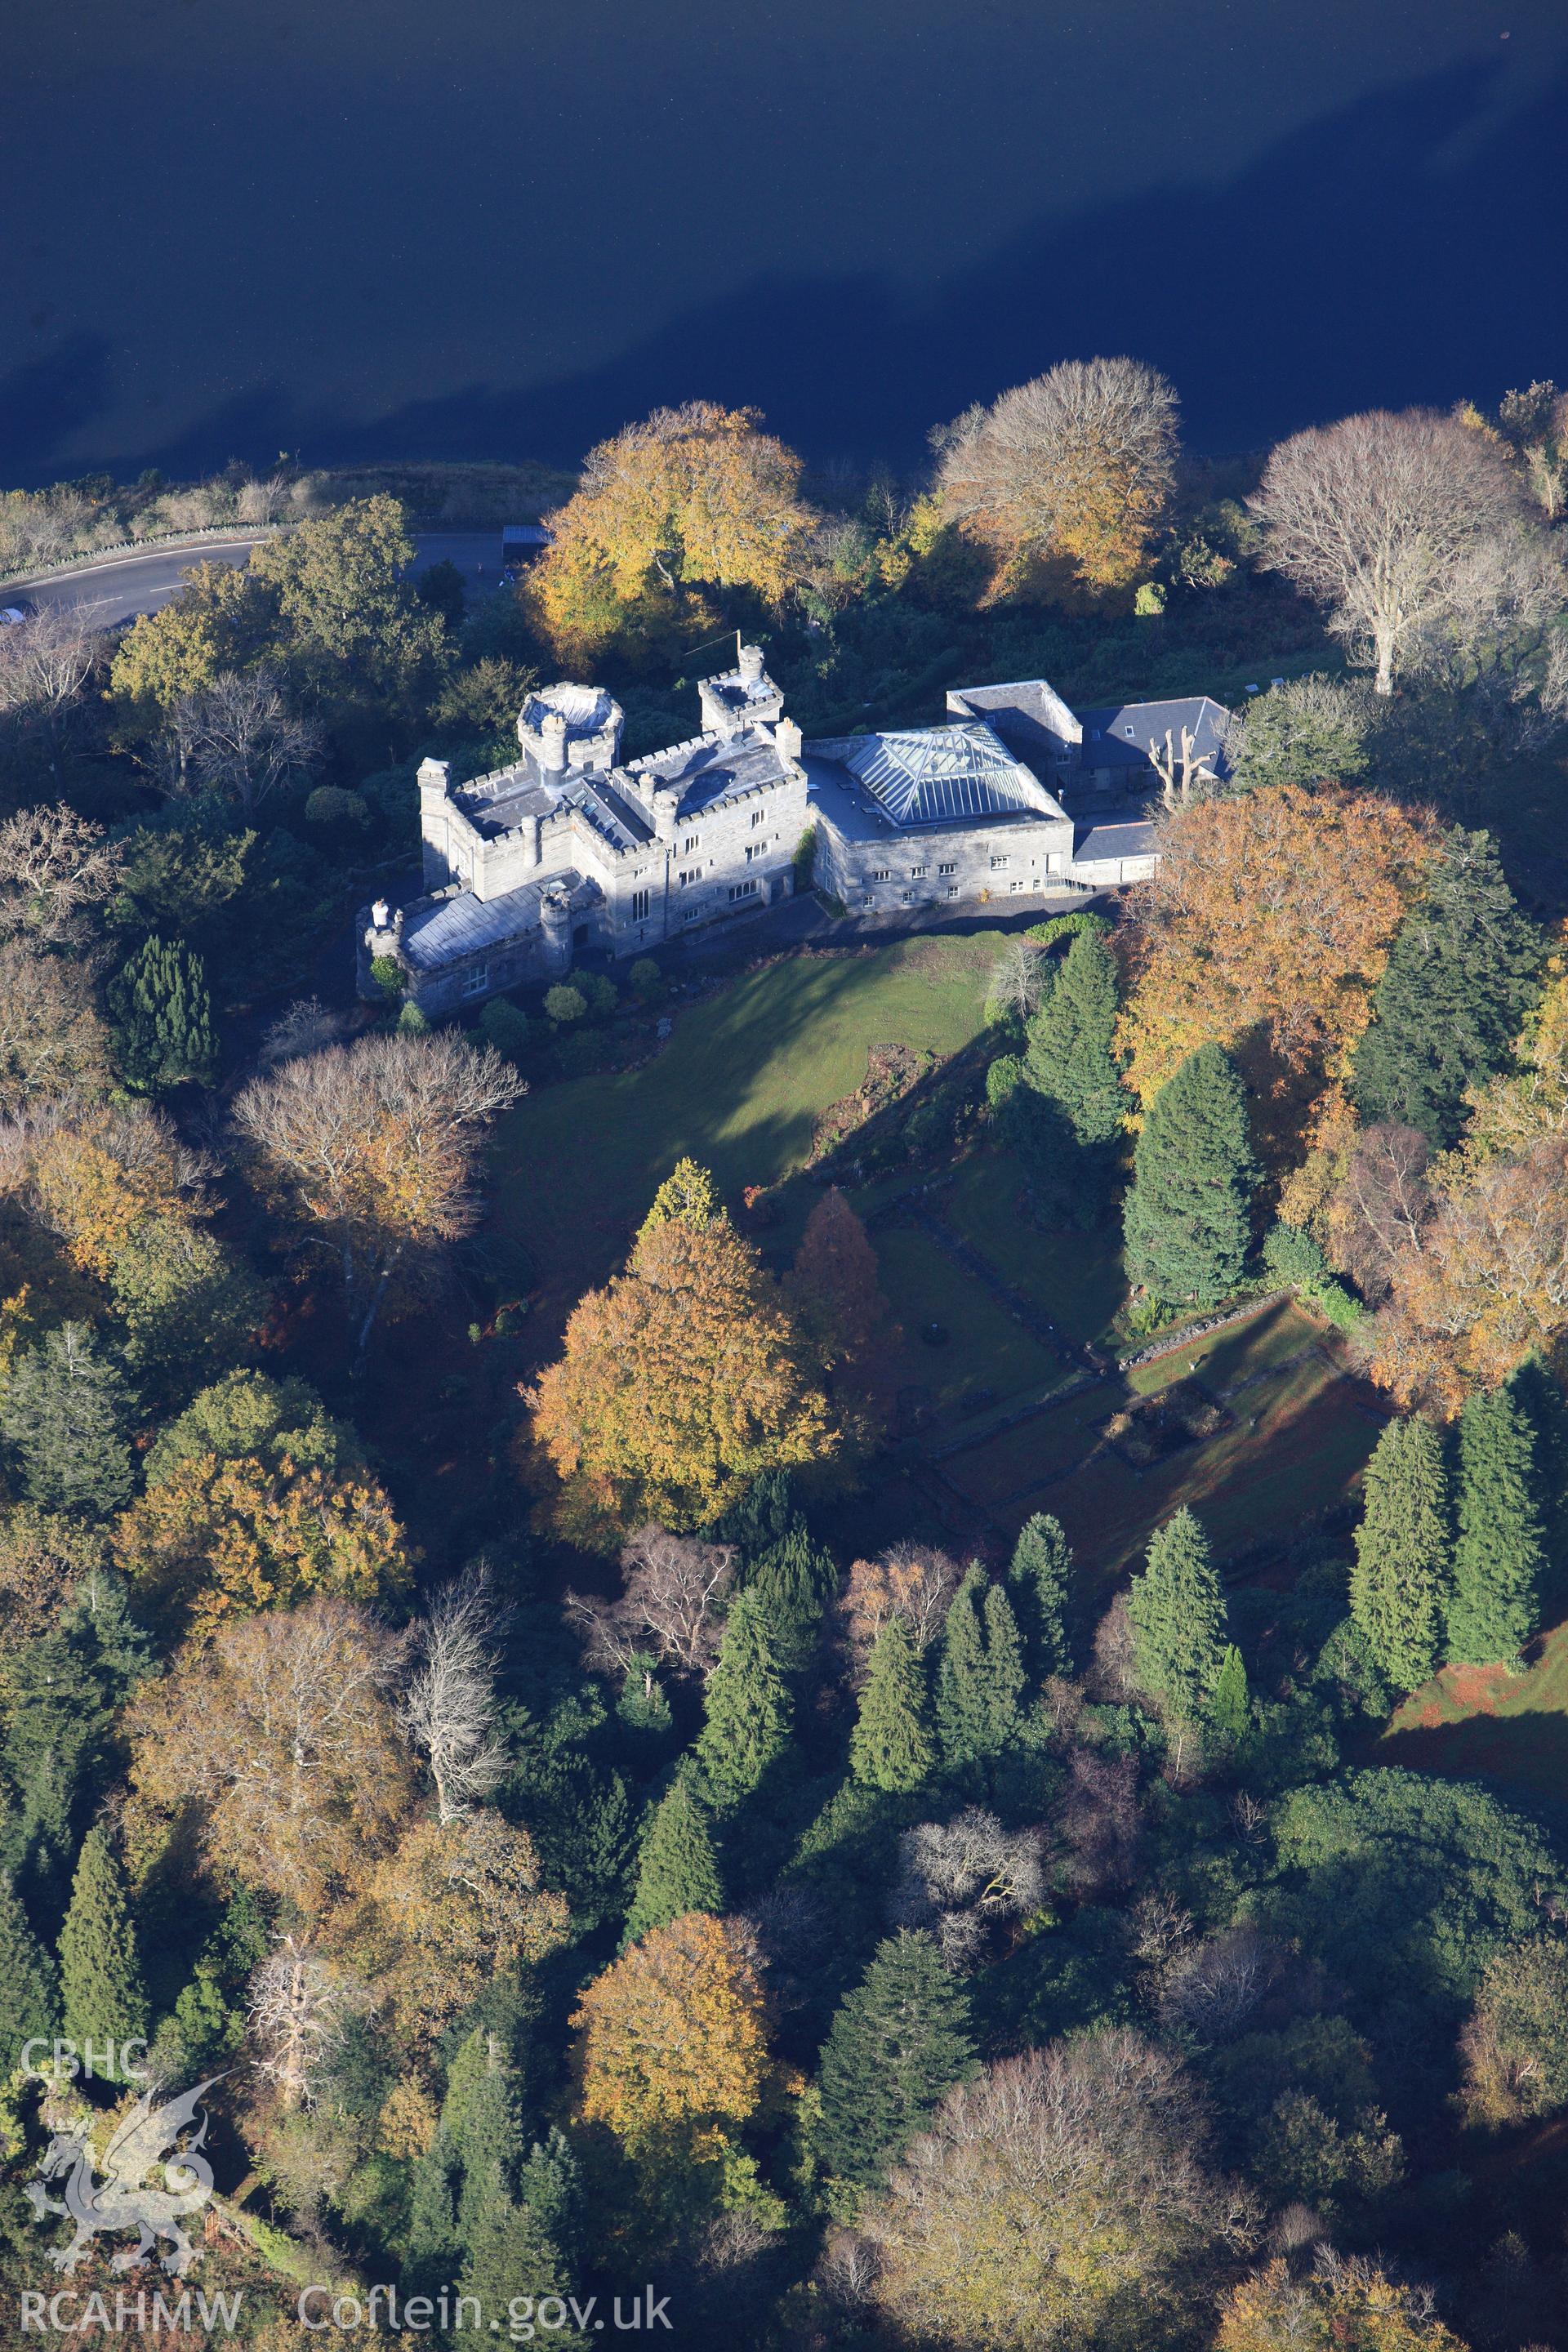 RCAHMW colour oblique photograph of Glandyfi Castle, gardens, with autumn colours. Taken by Toby Driver on 05/11/2012.